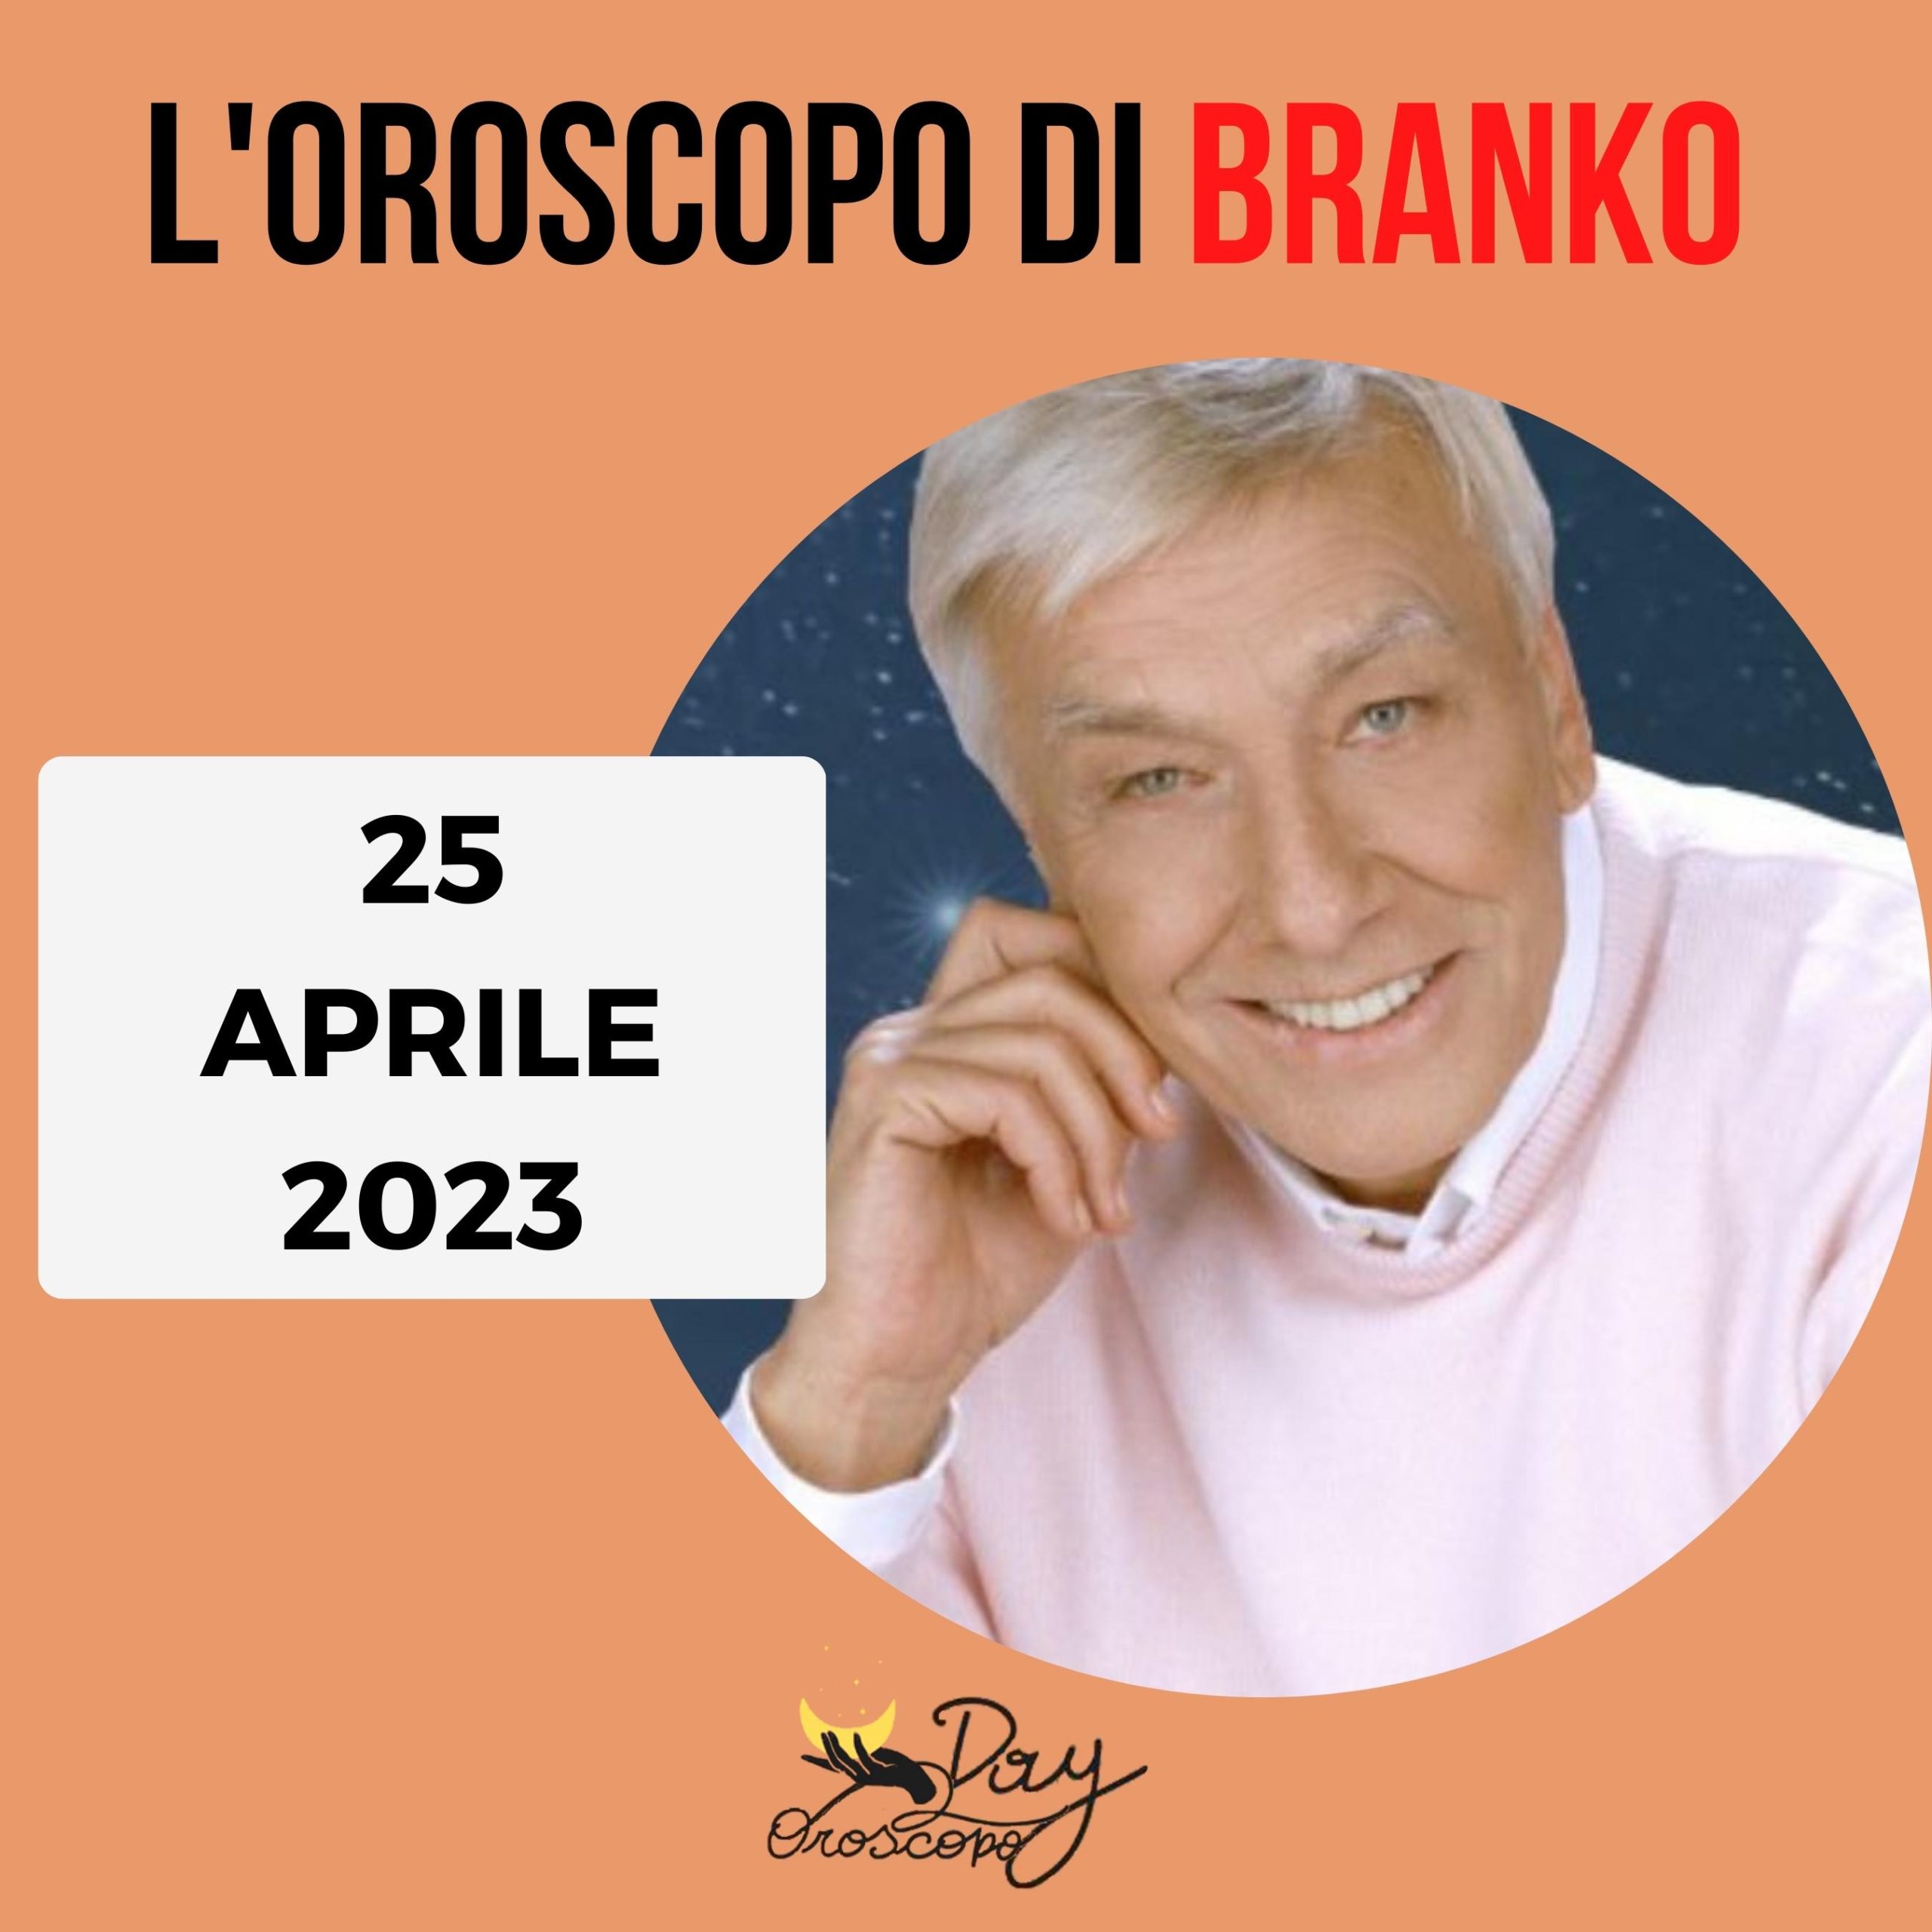 Oroscopo oggi domani Branko 25 aprile 2023